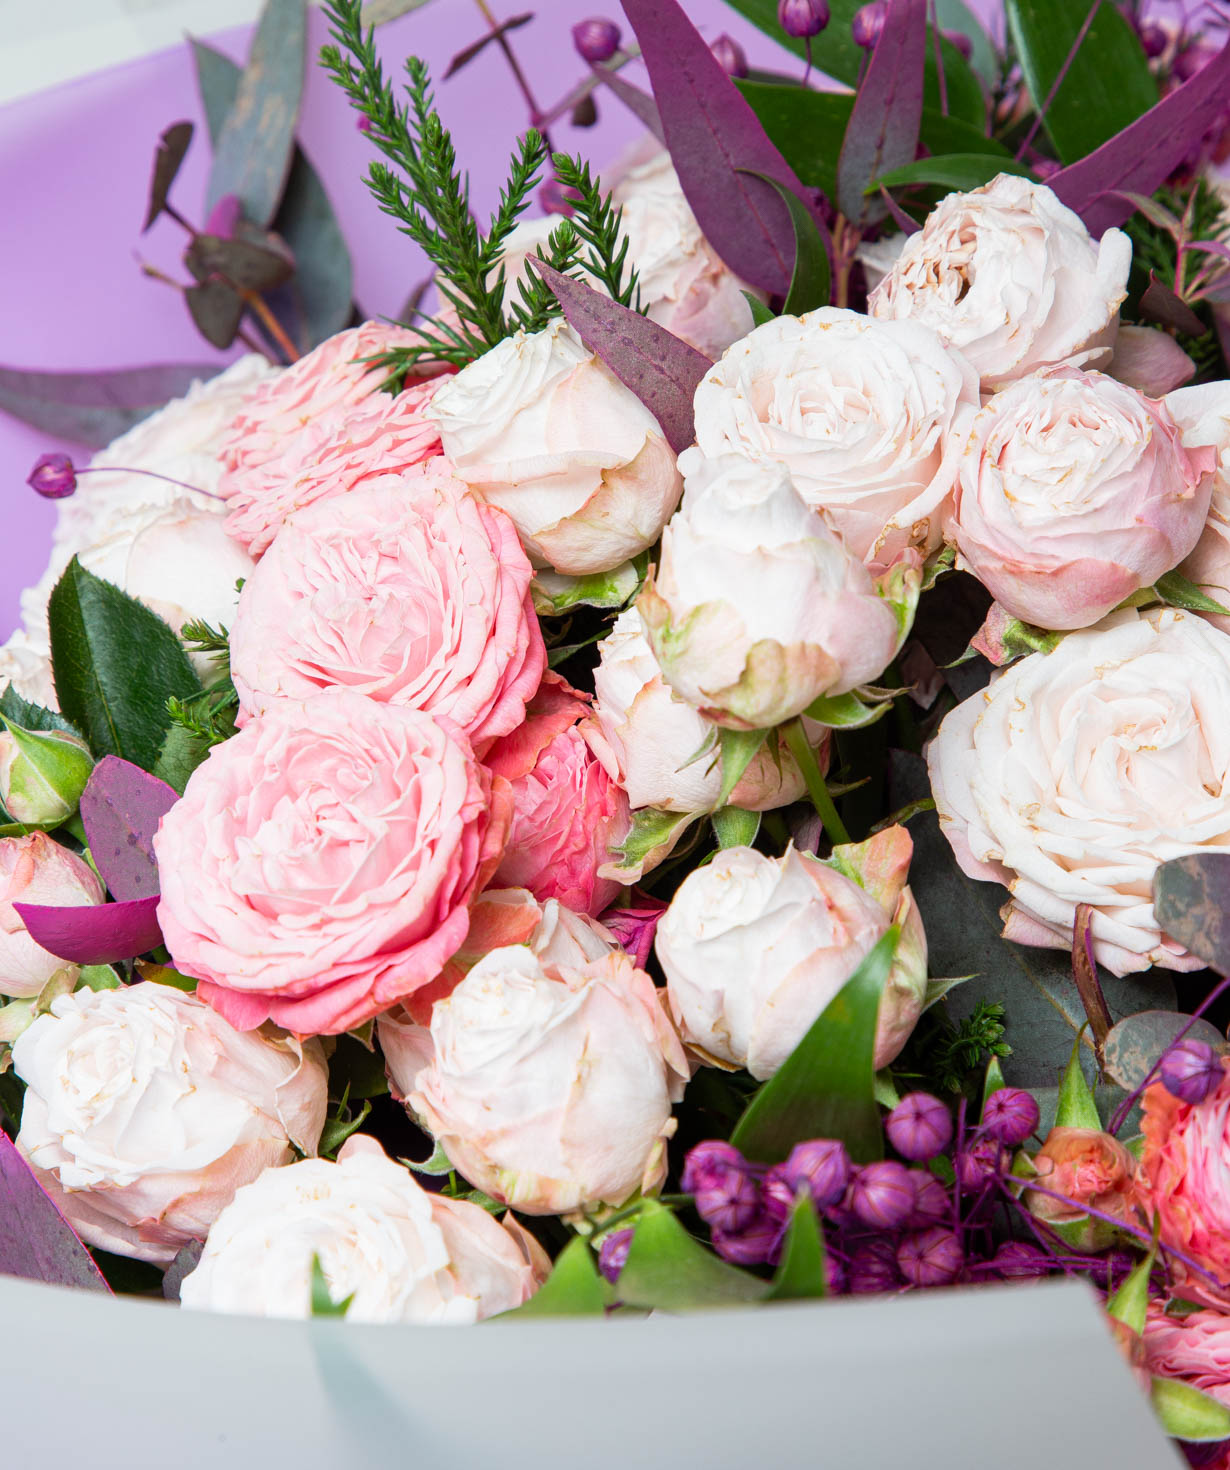 Bouquet «Tiberina» with spray roses